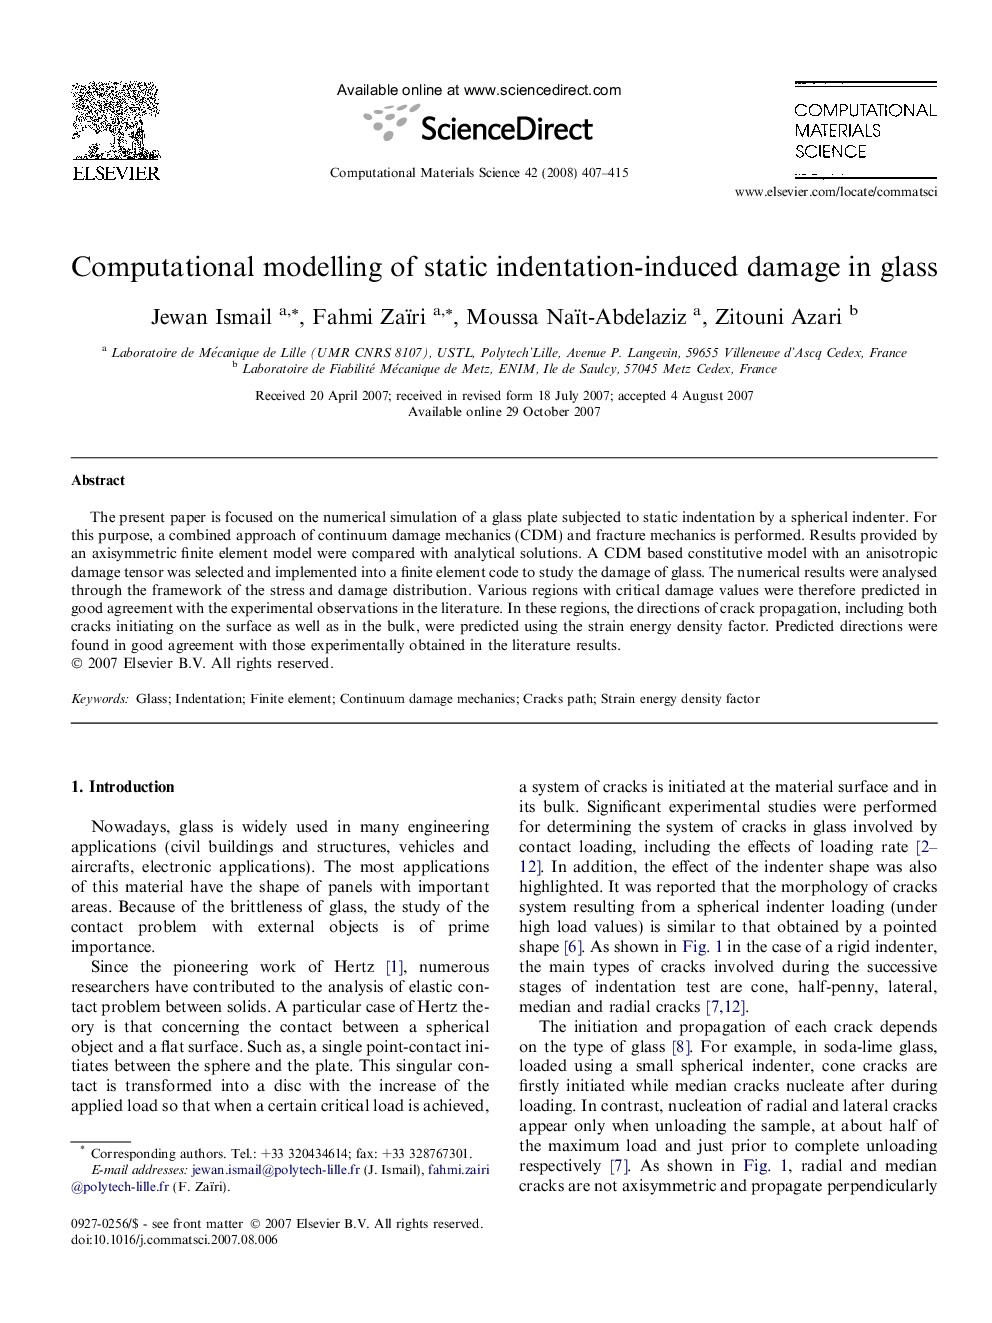 Computational modelling of static indentation-induced damage in glass